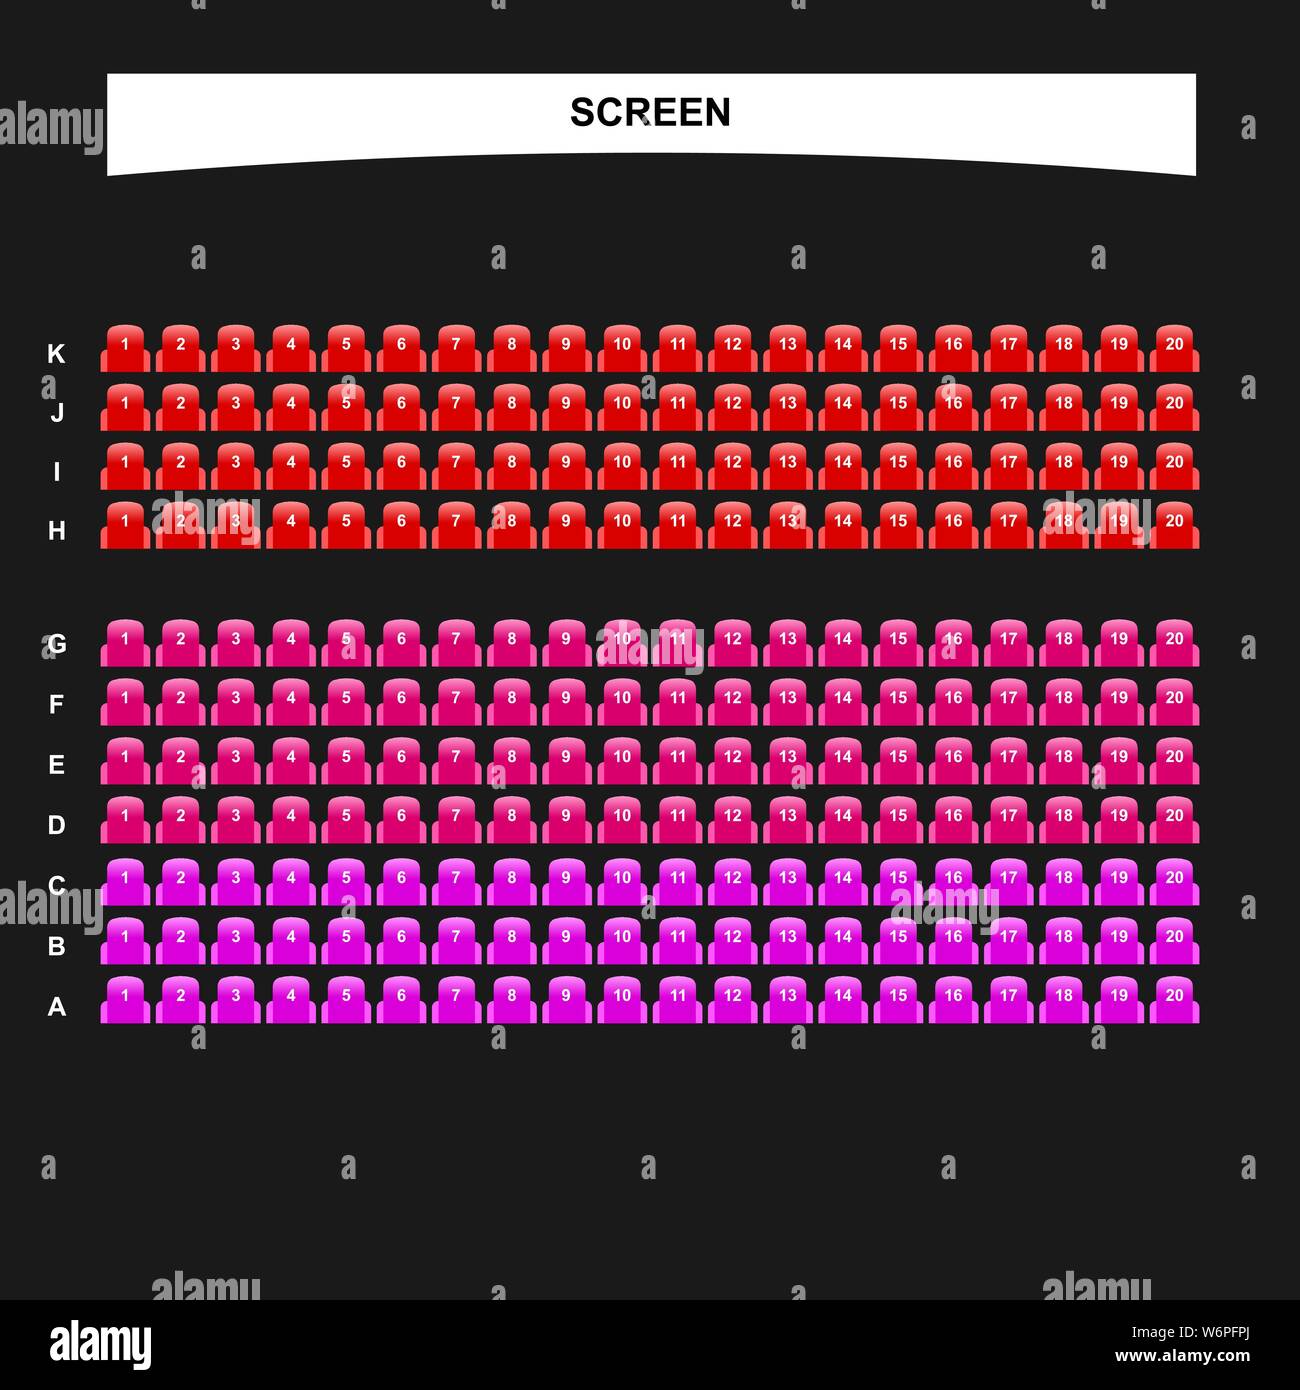 Interfaz de reserva de asientos de película plantilla para compra de  boletos Imagen Vector de stock - Alamy